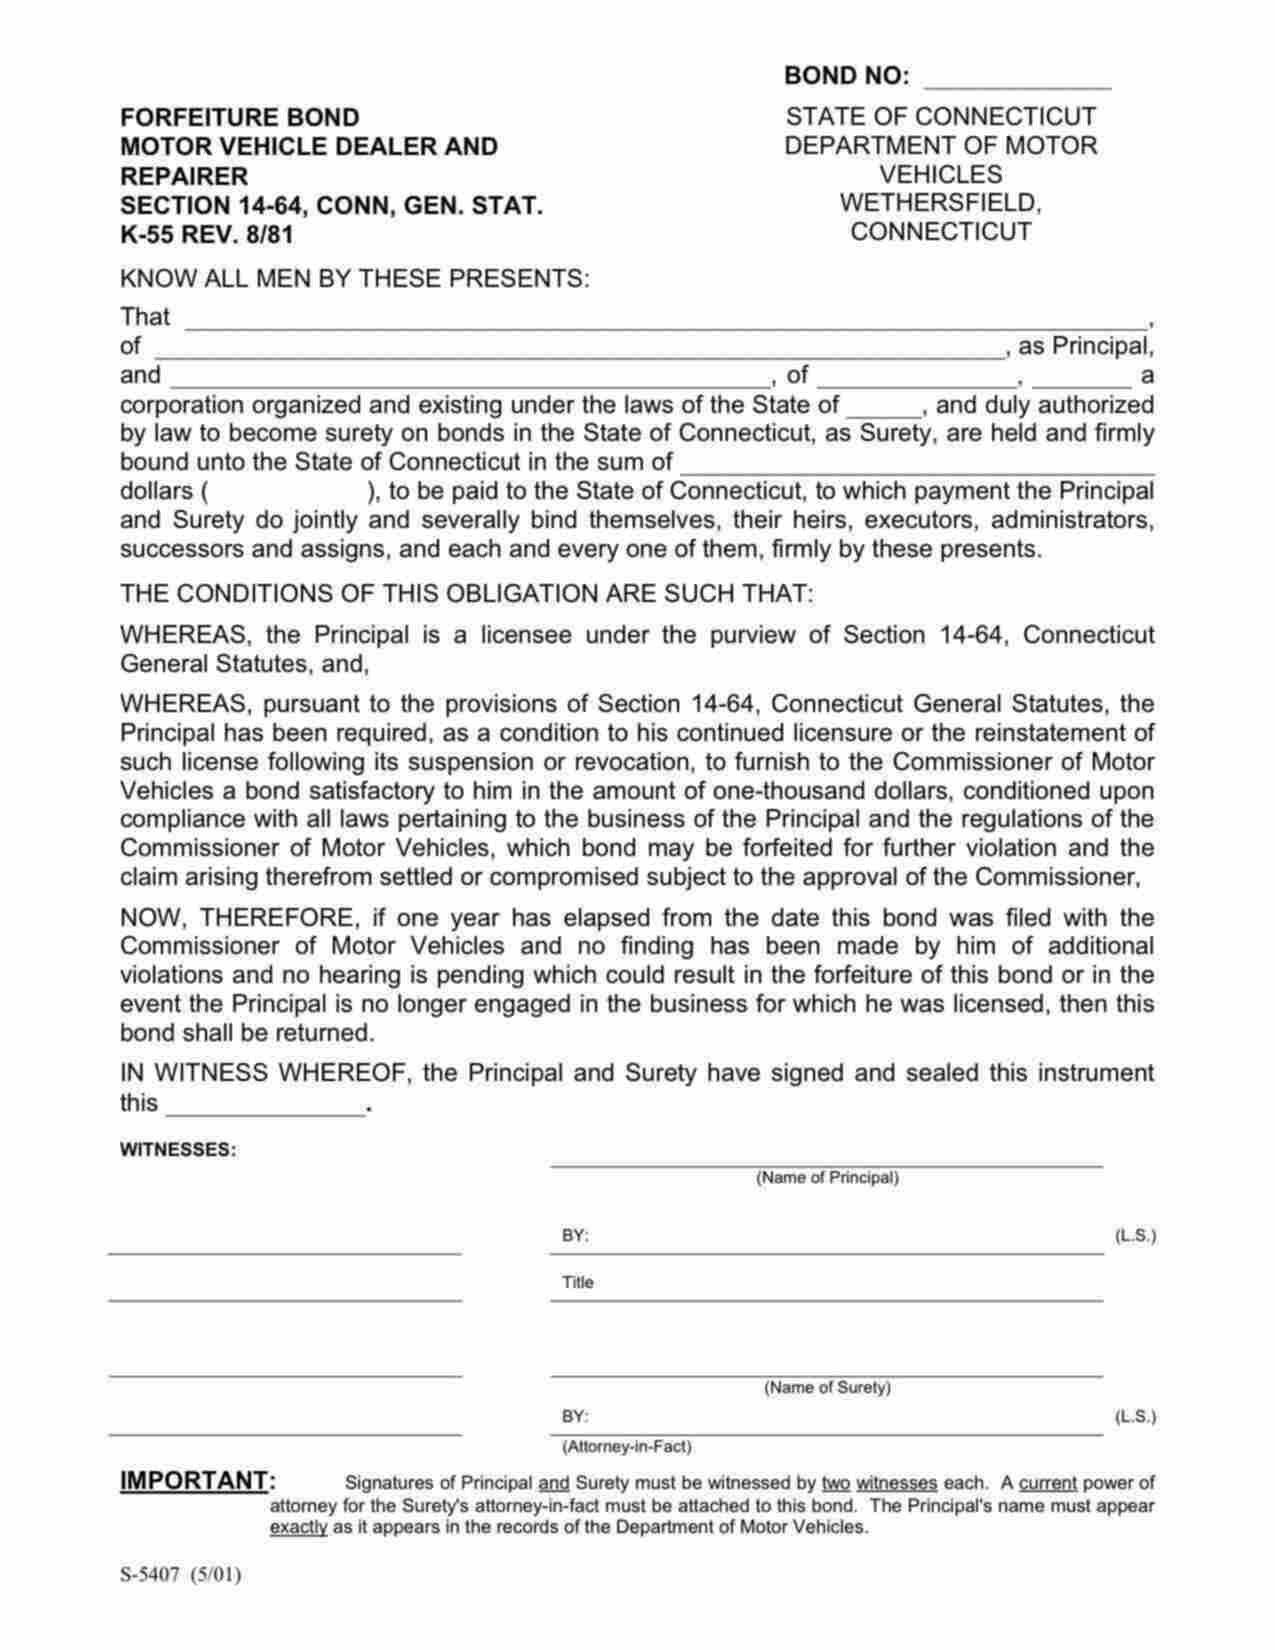 Connecticut Motor Vehicle Dealer Forfeiture Bond Form